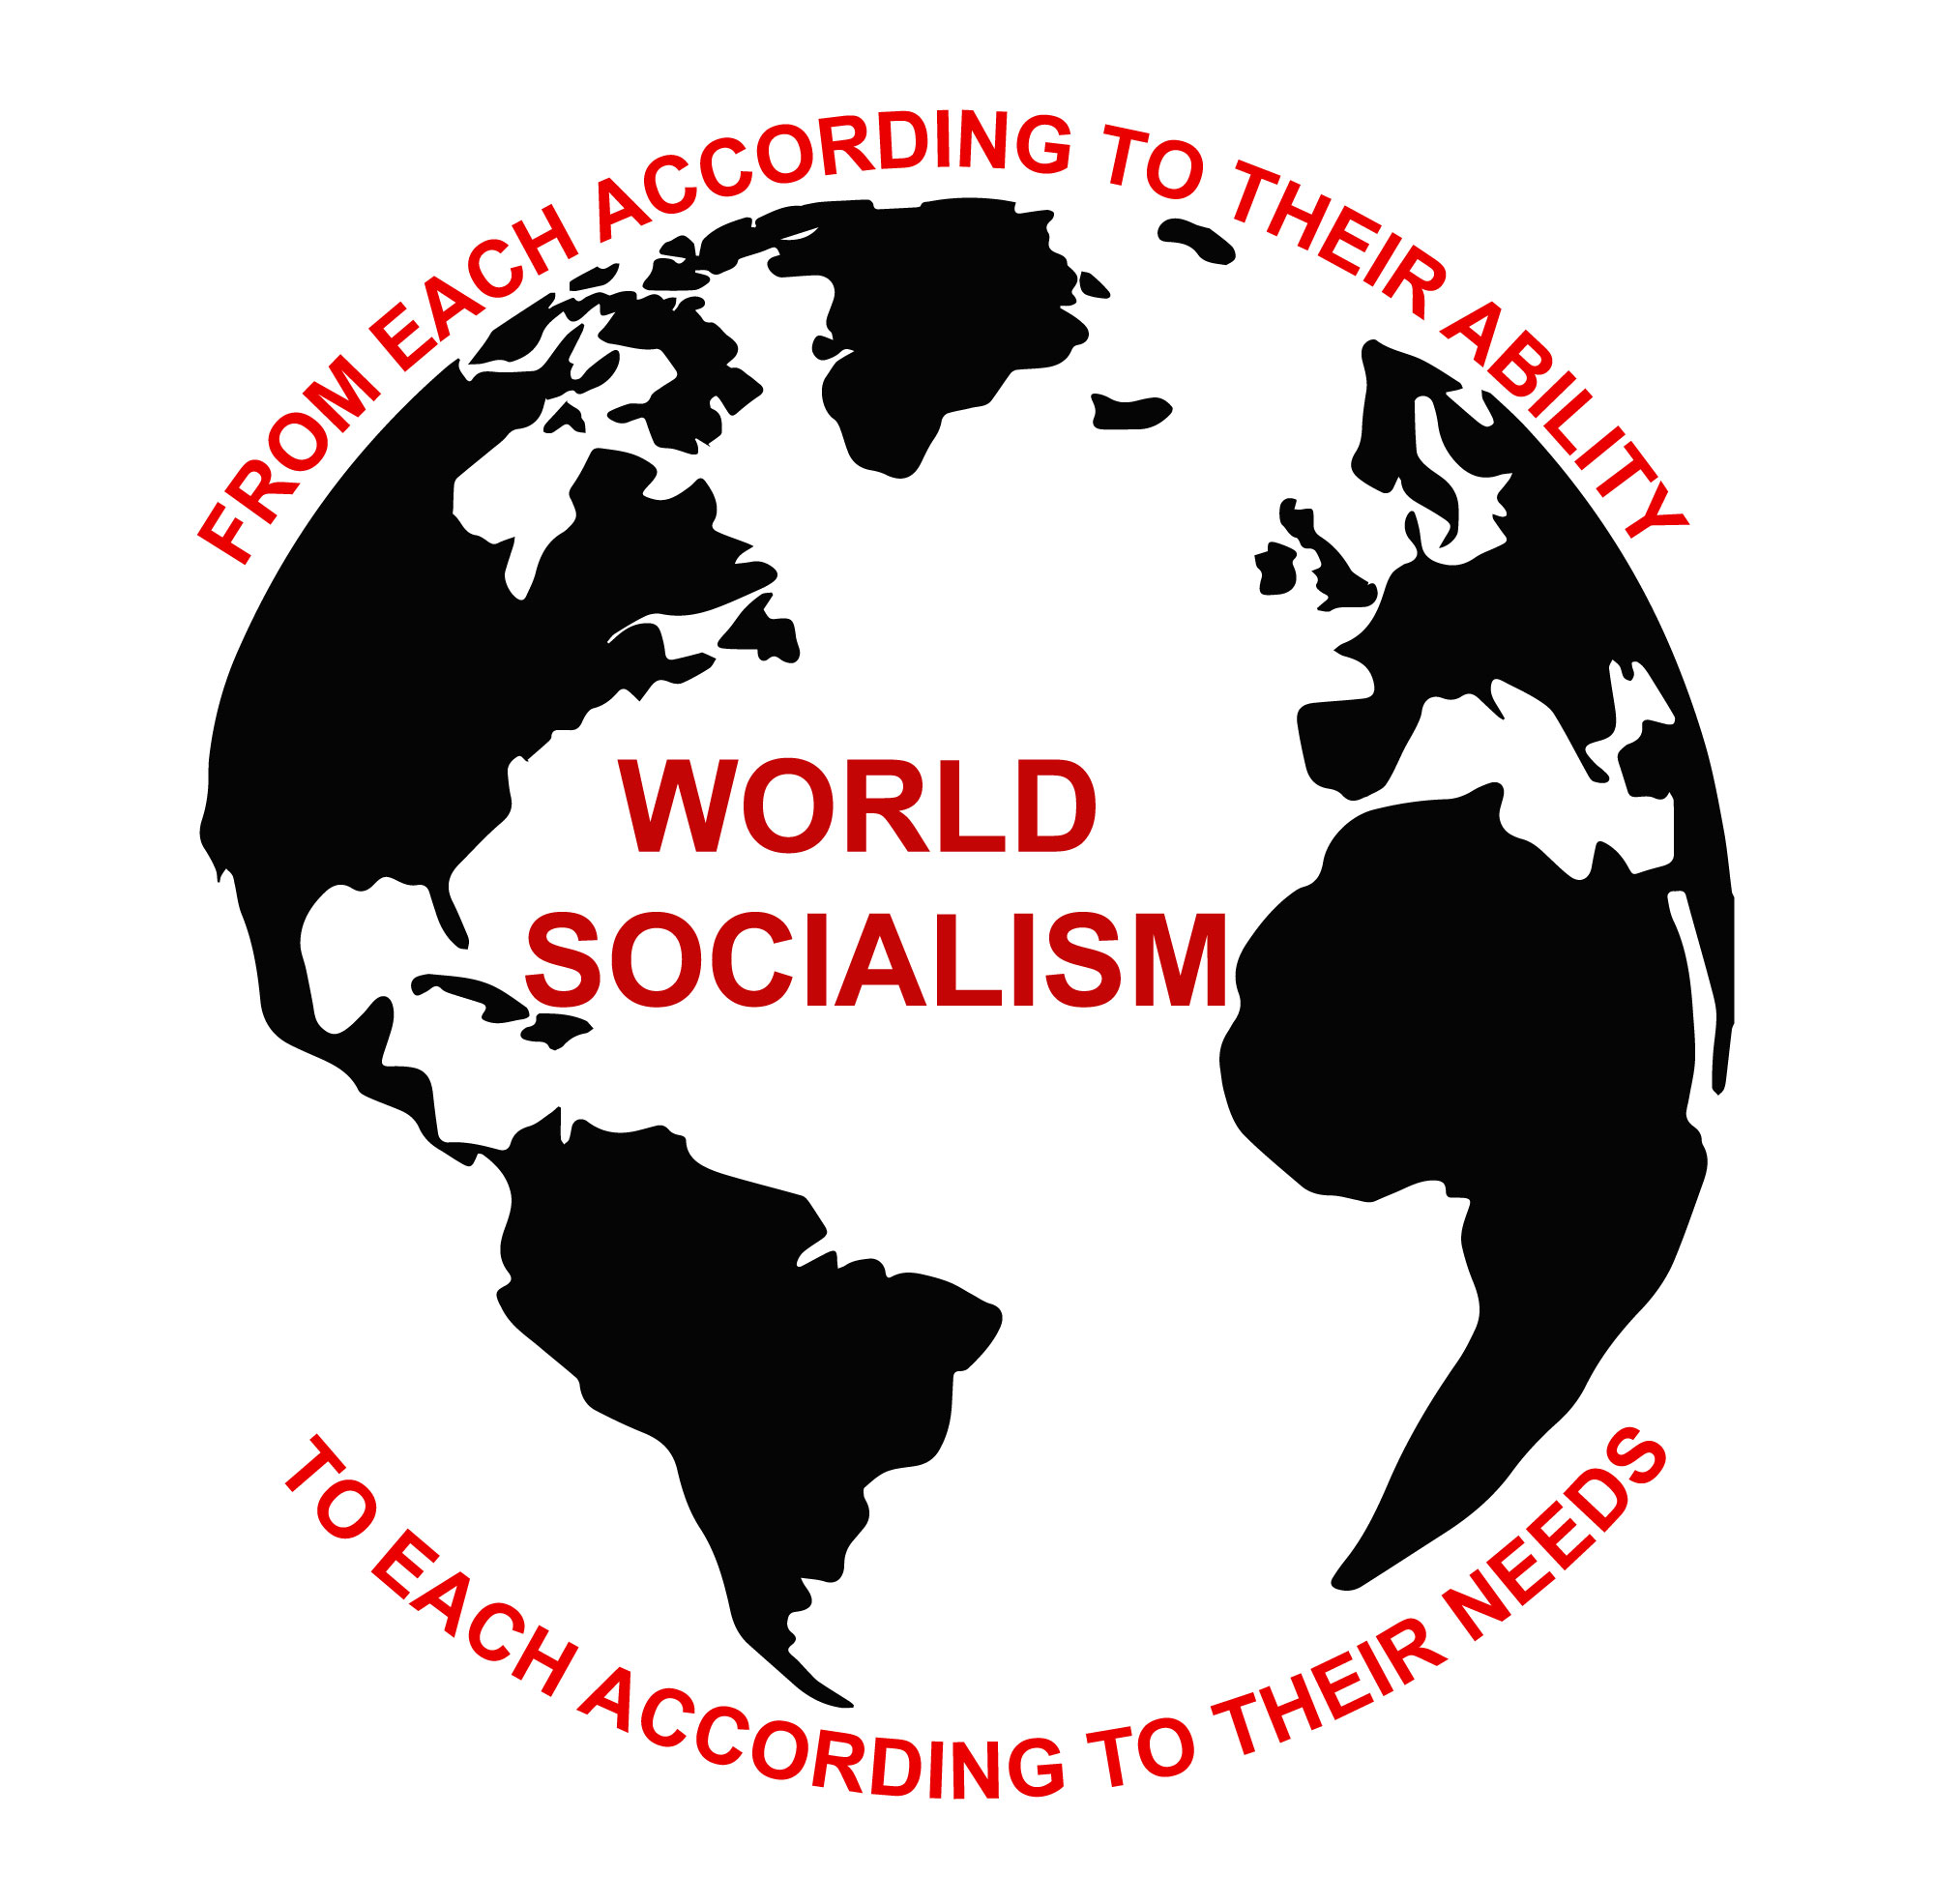 Socialist Studies